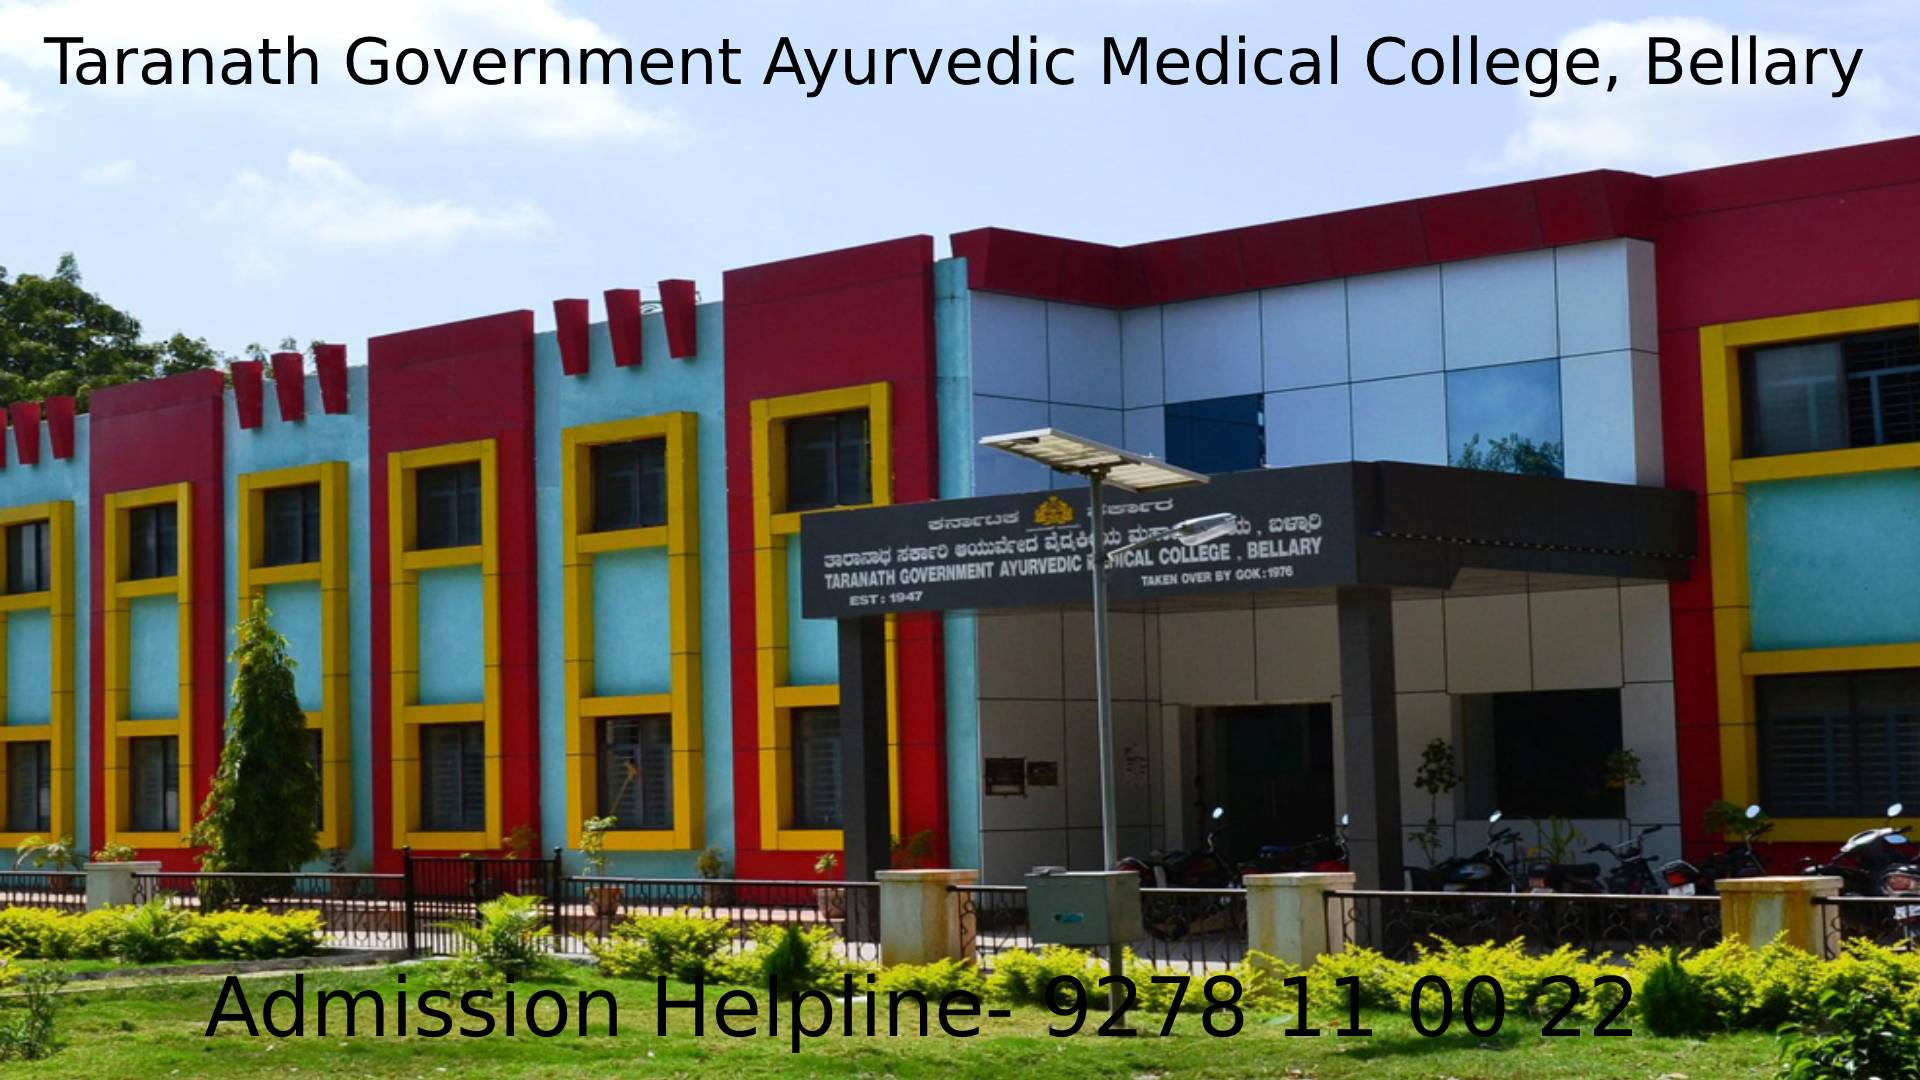 Taranath Government Ayurvedic Medical College, Bellary